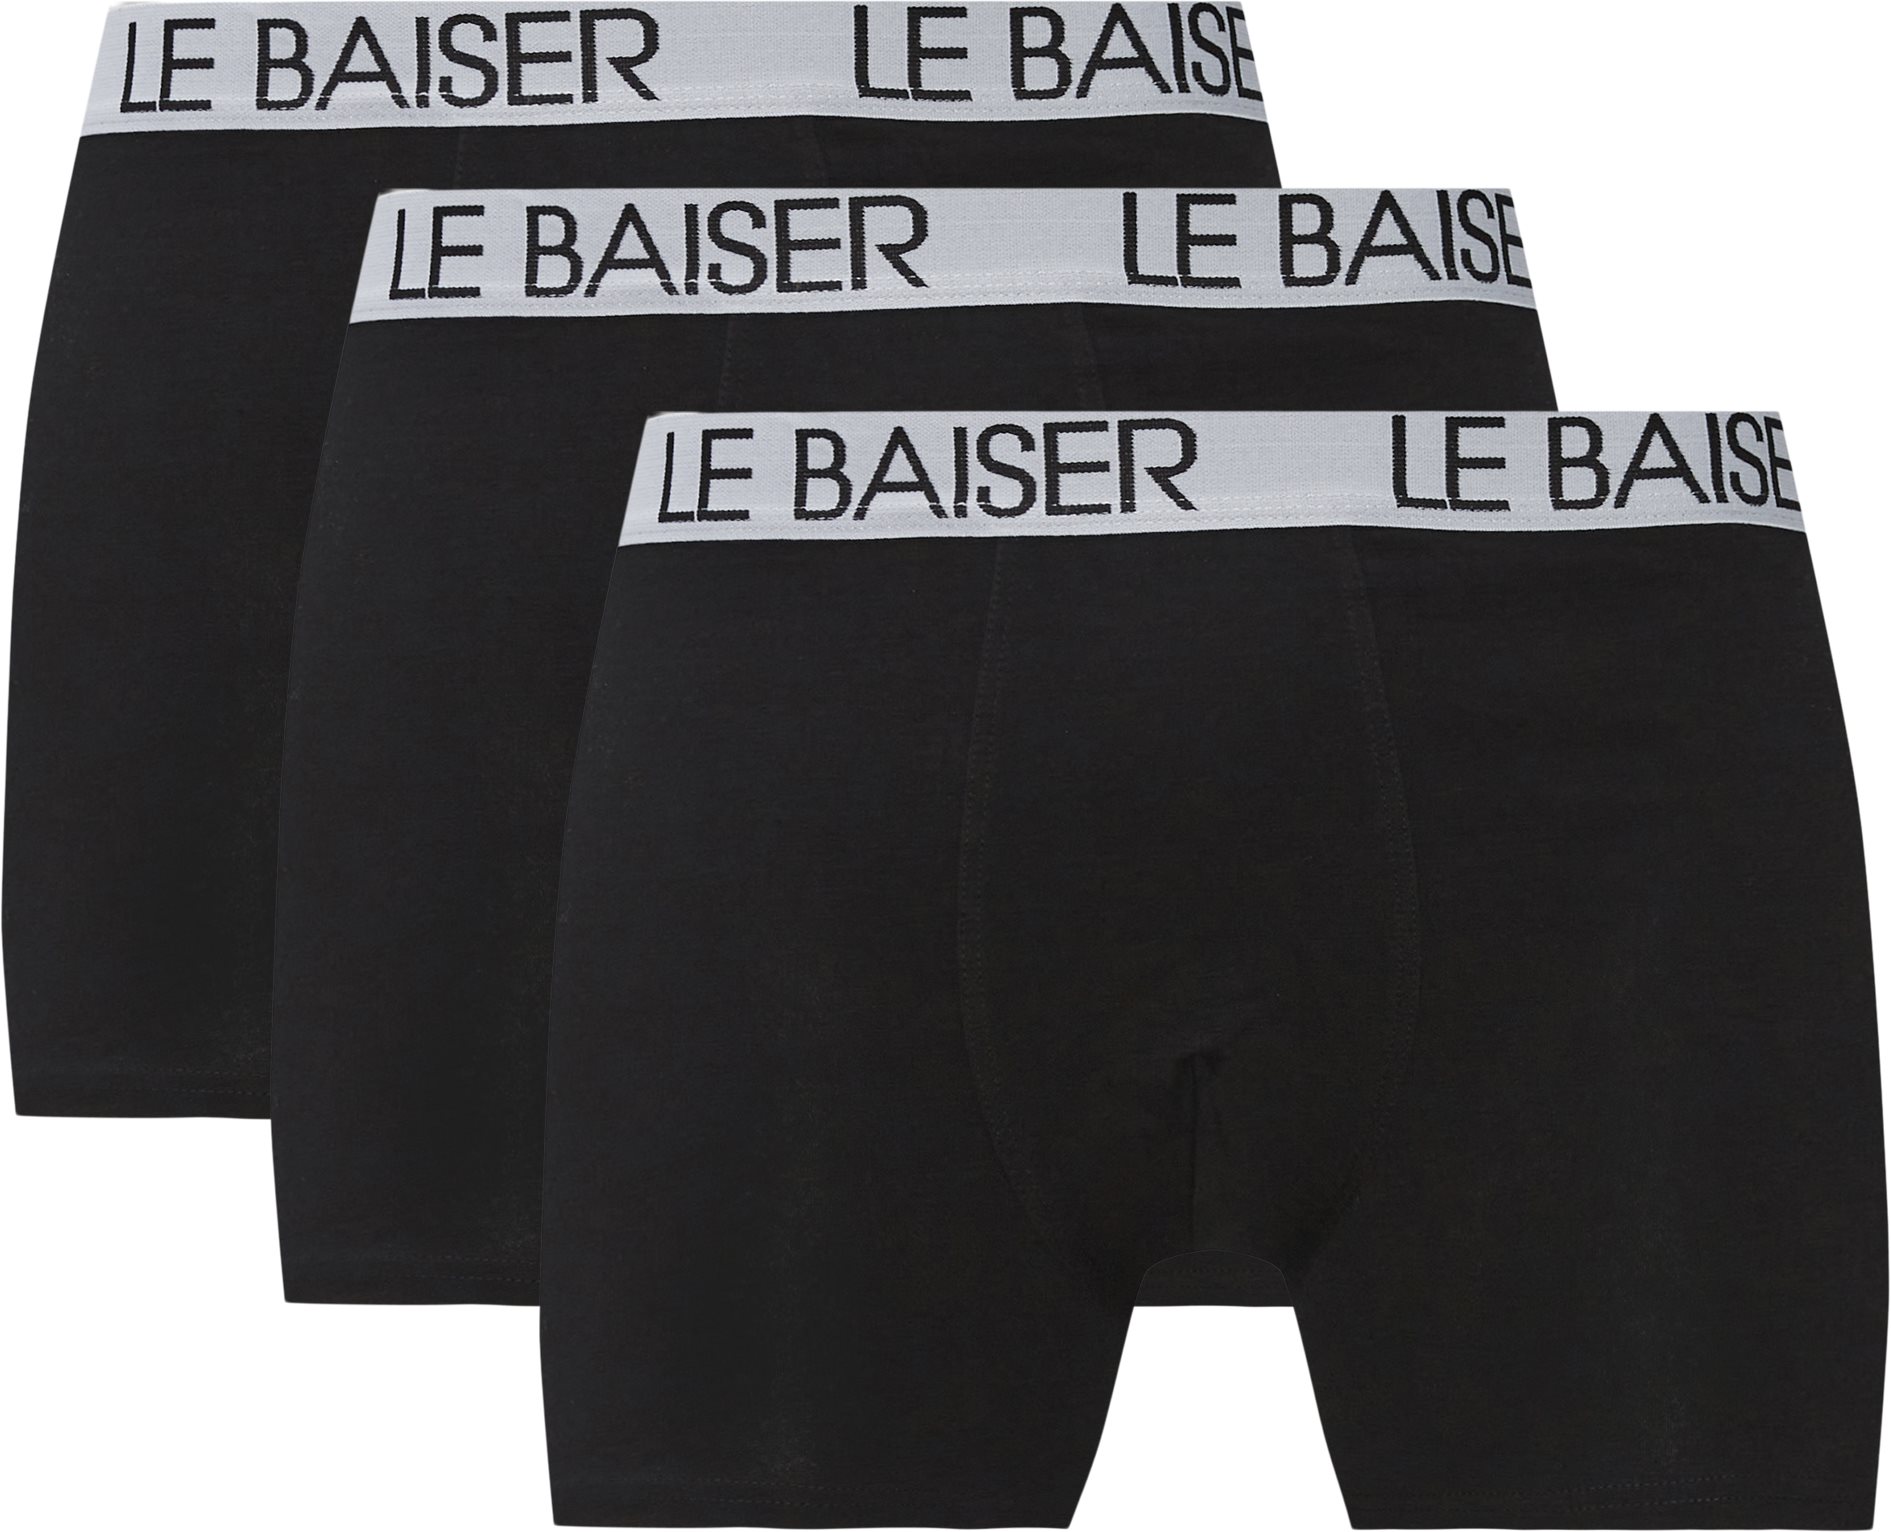 Le Baiser Underwear TIGHTS 3 PACK 88020-1101 Black